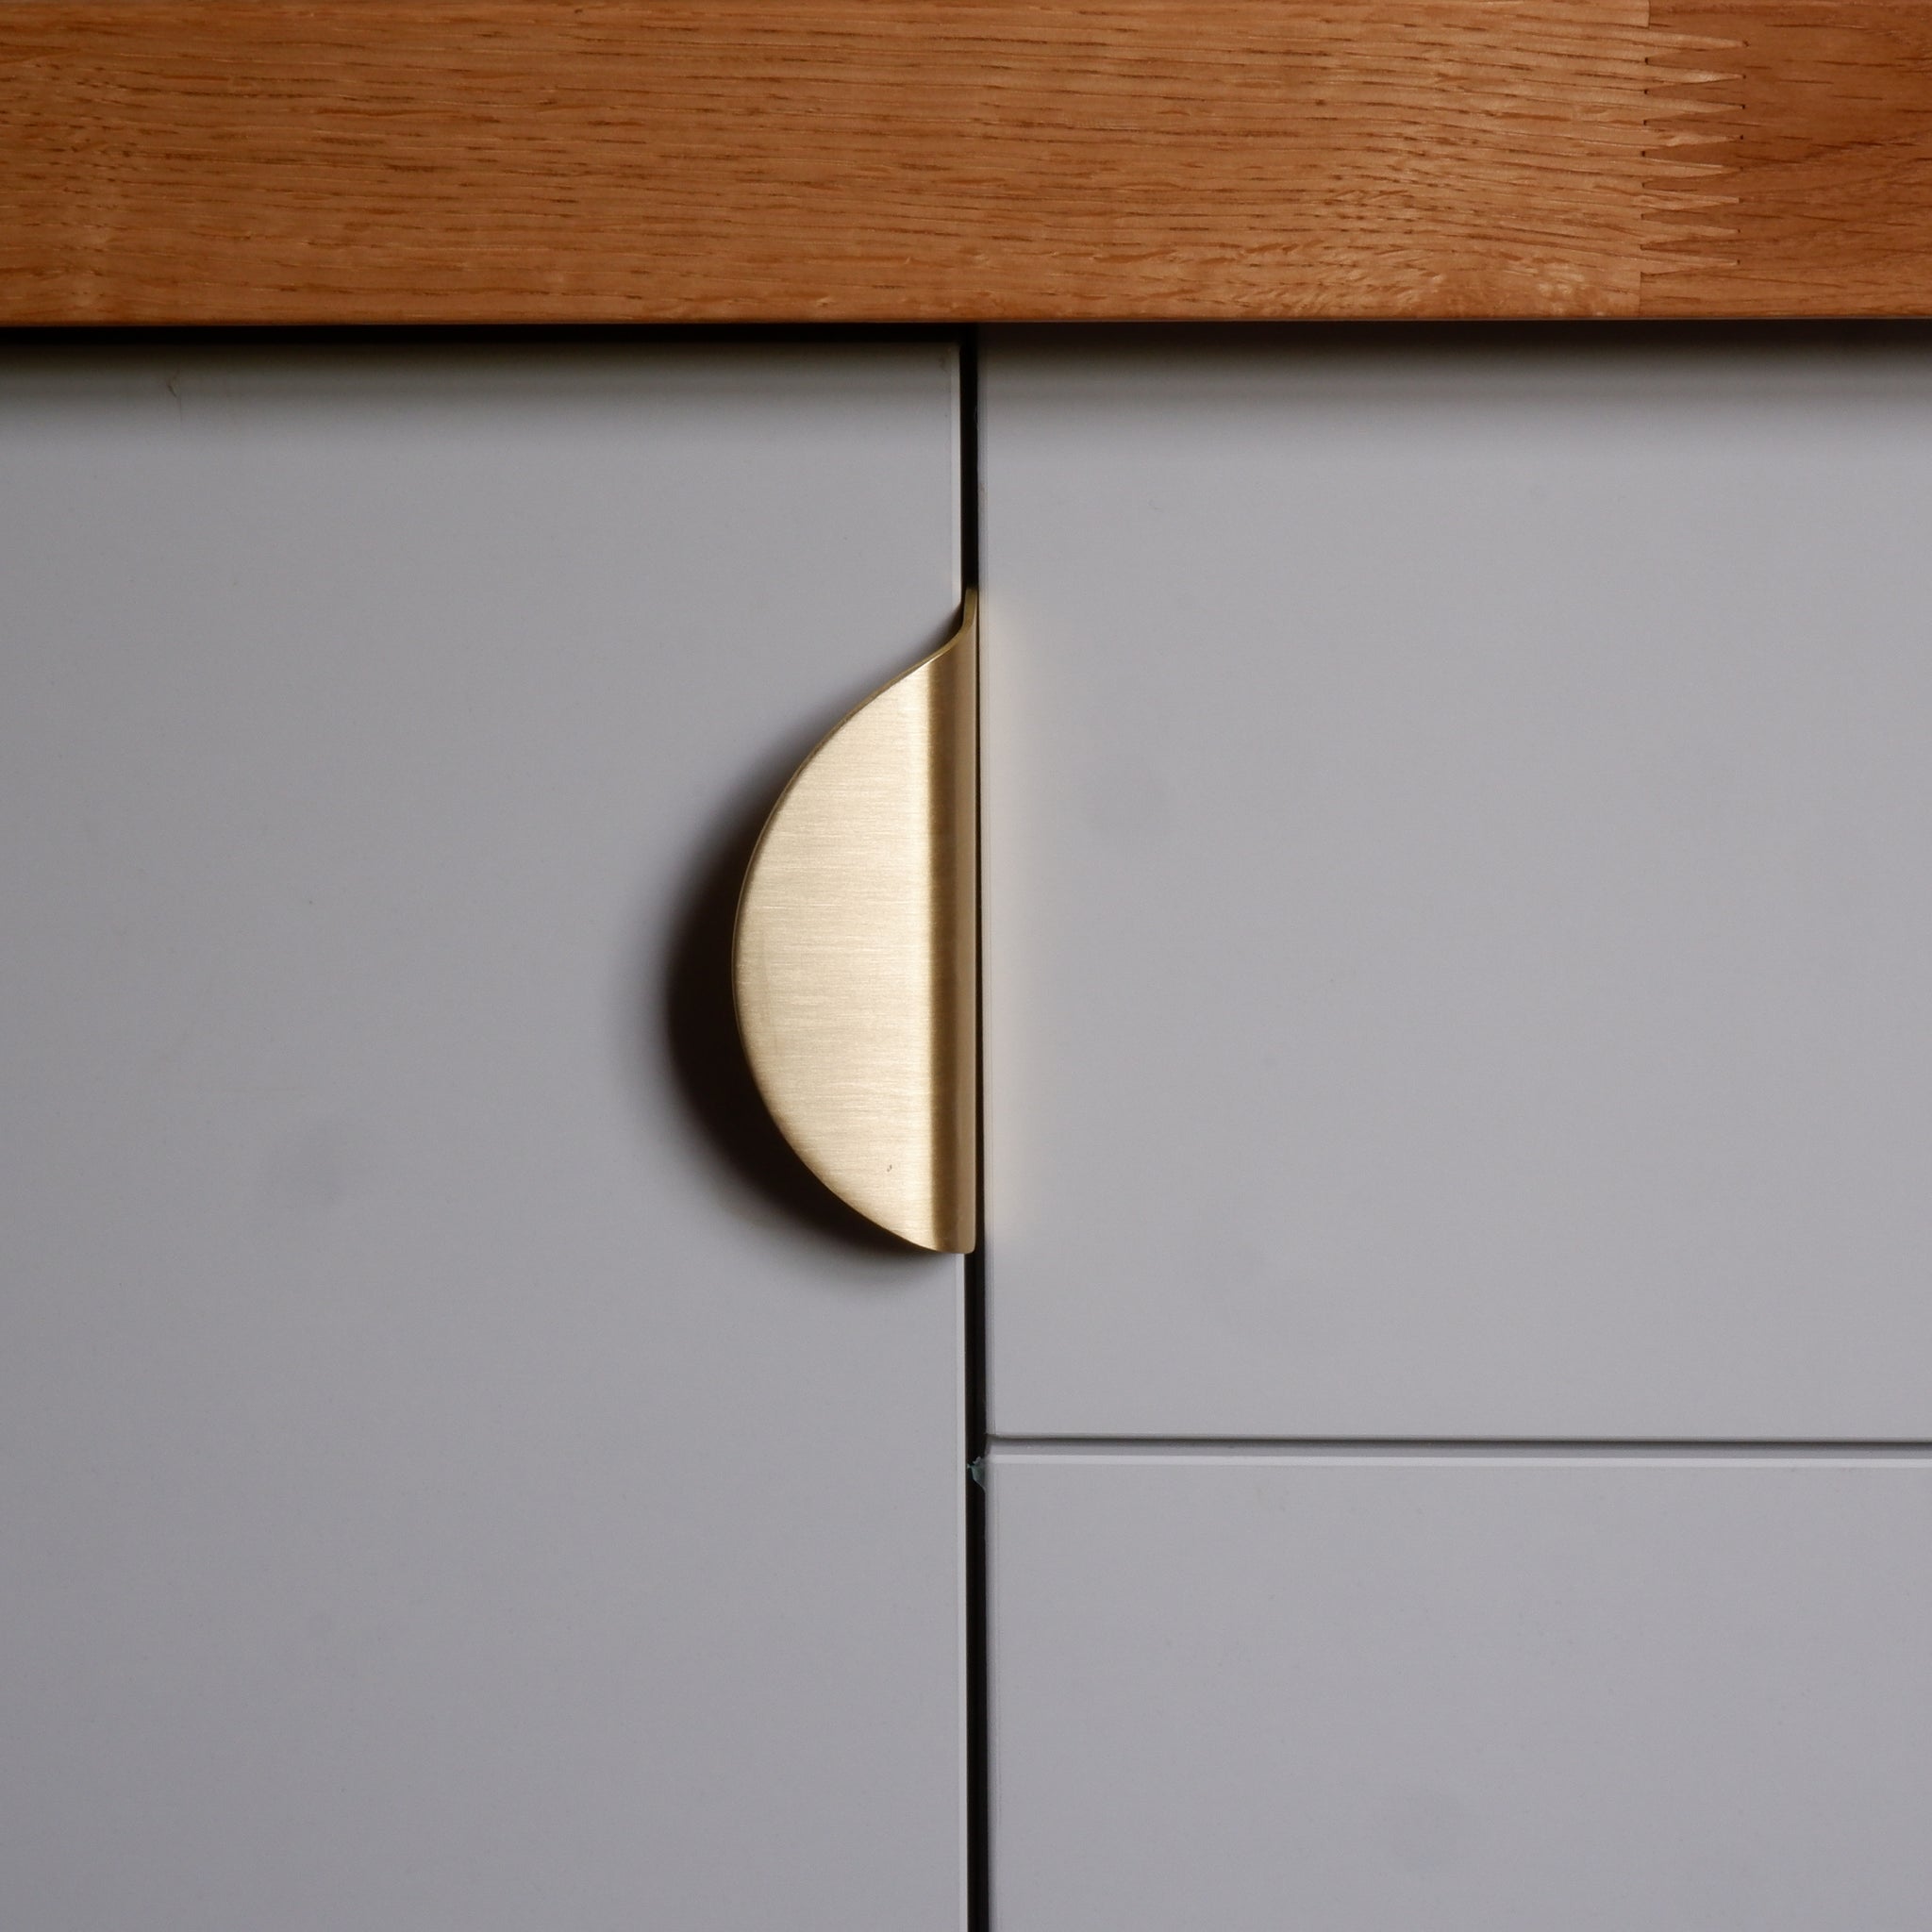 semi-circular edge pull kitchen handle in brass by Swarf hardware